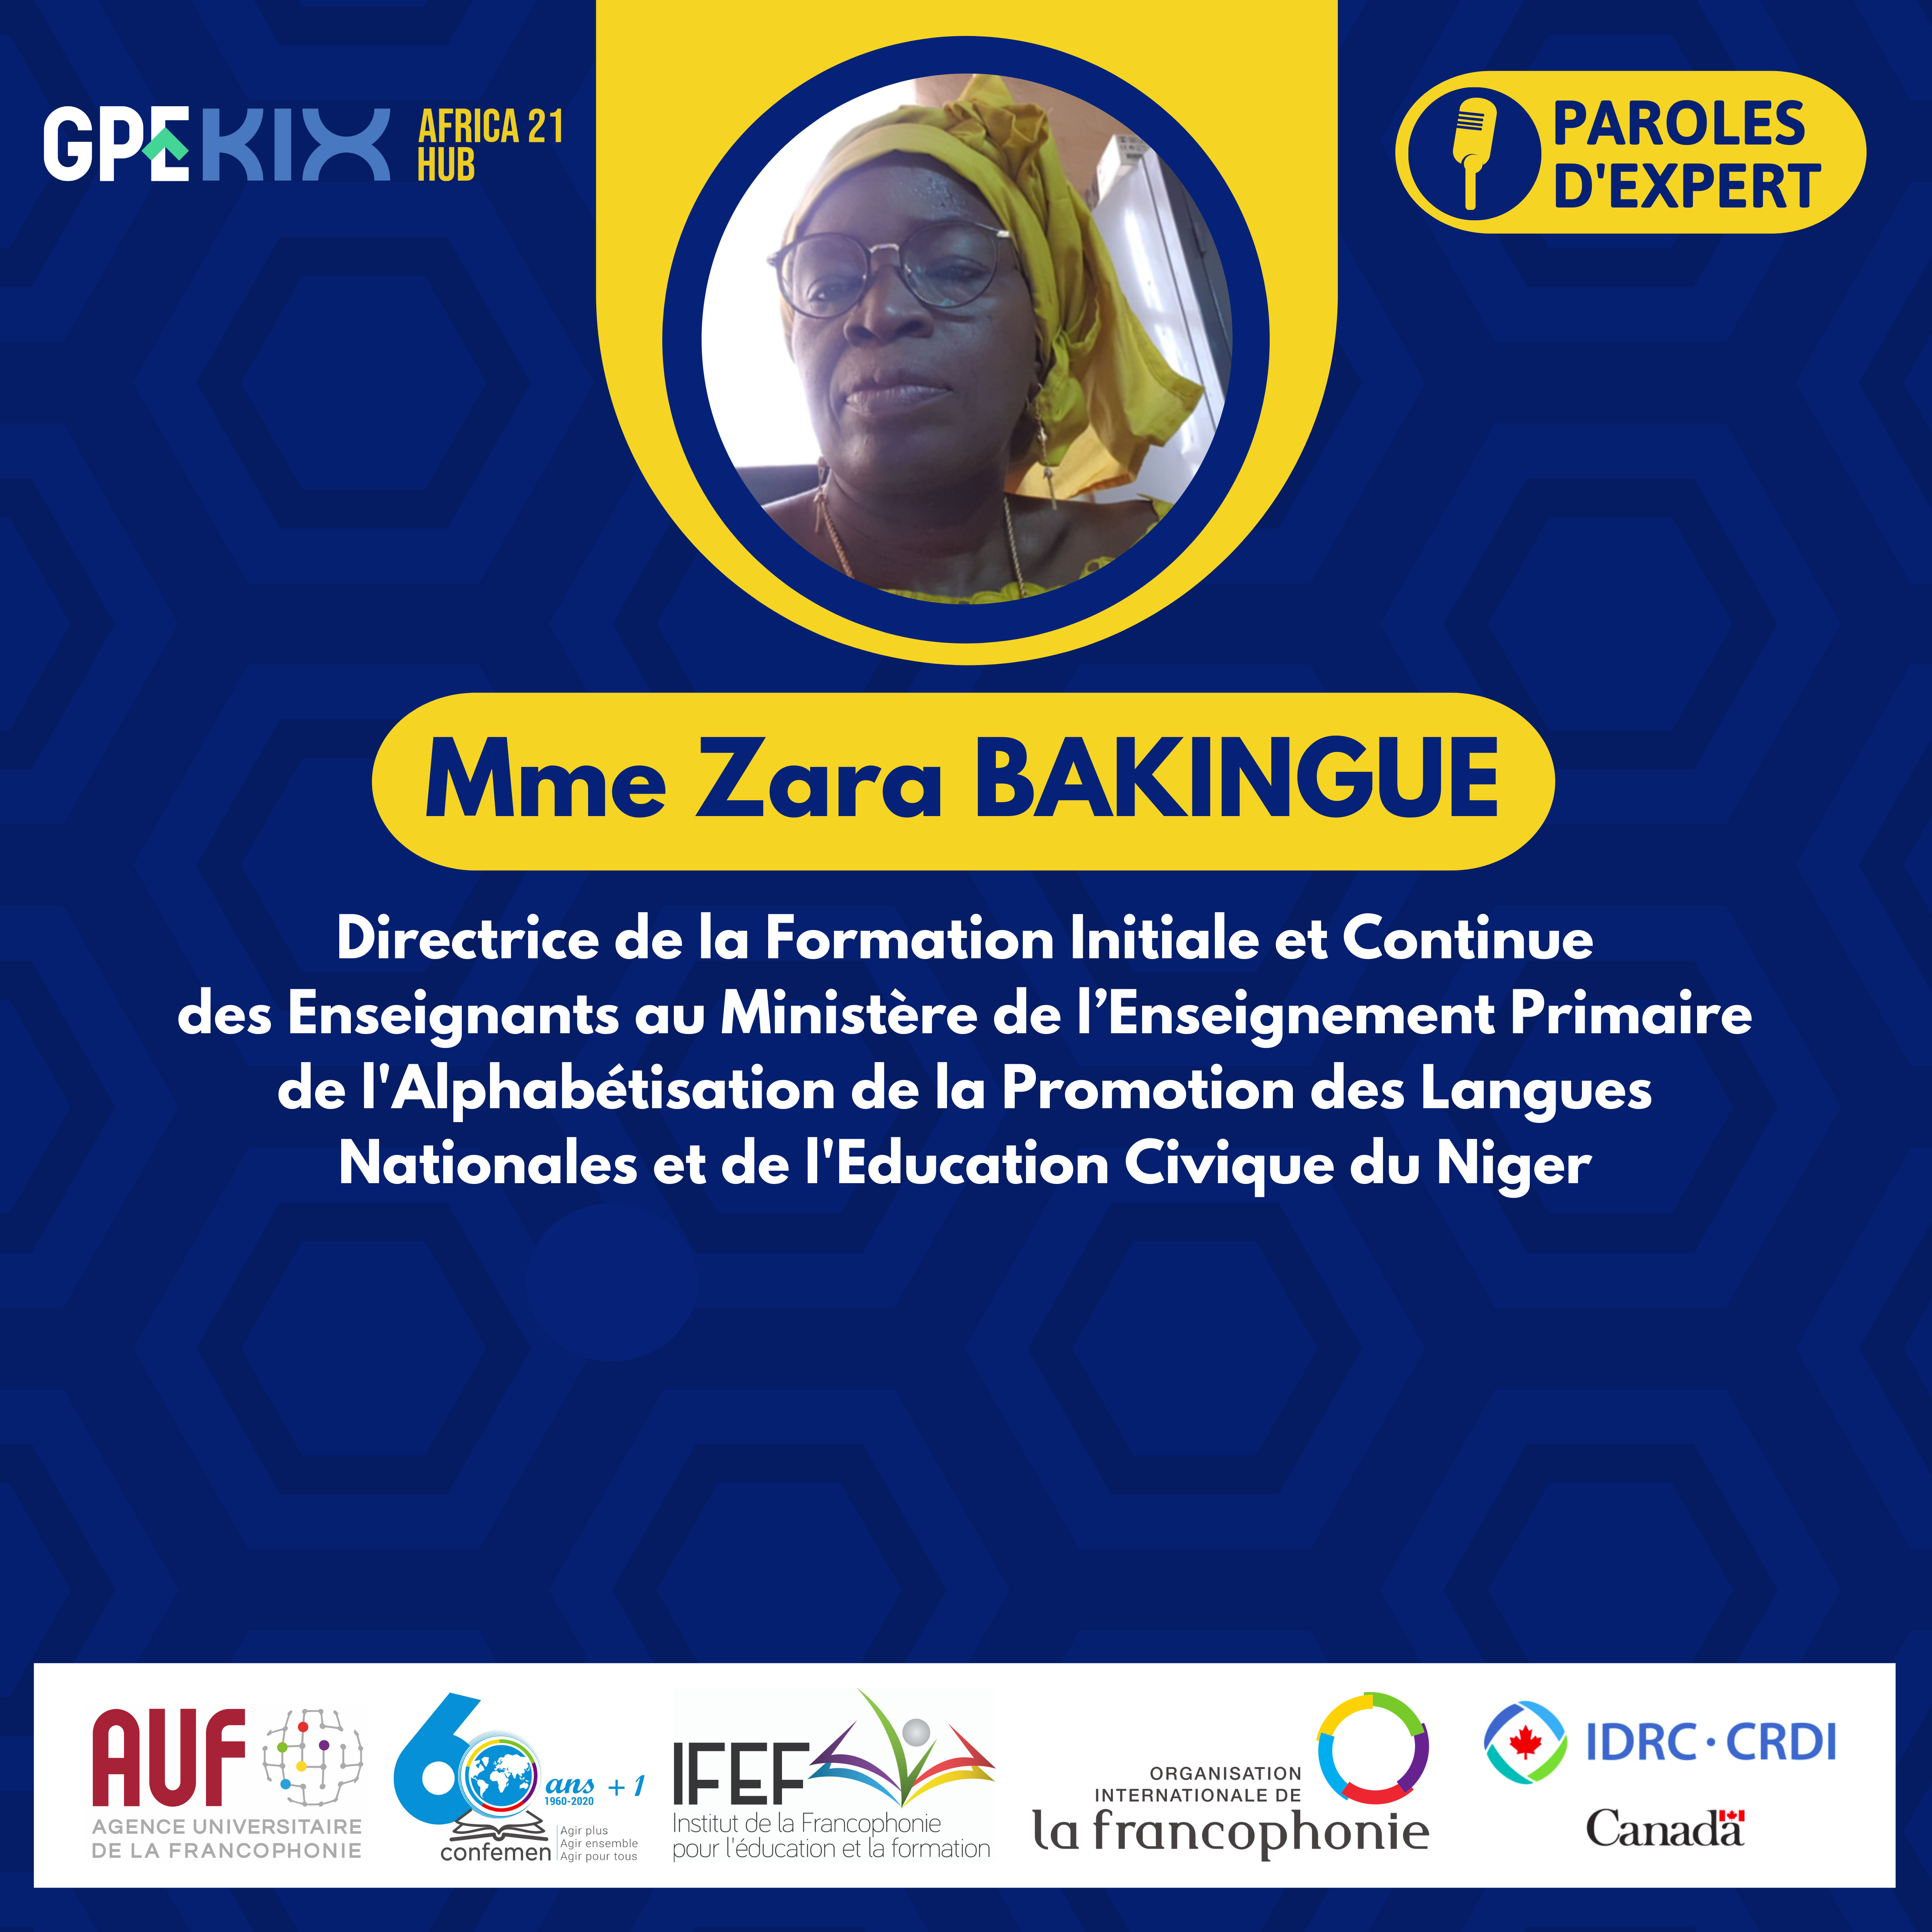 First episode of the KIX Africa 21 hub "Parole d'experts": A conversation with Zara Bakingue